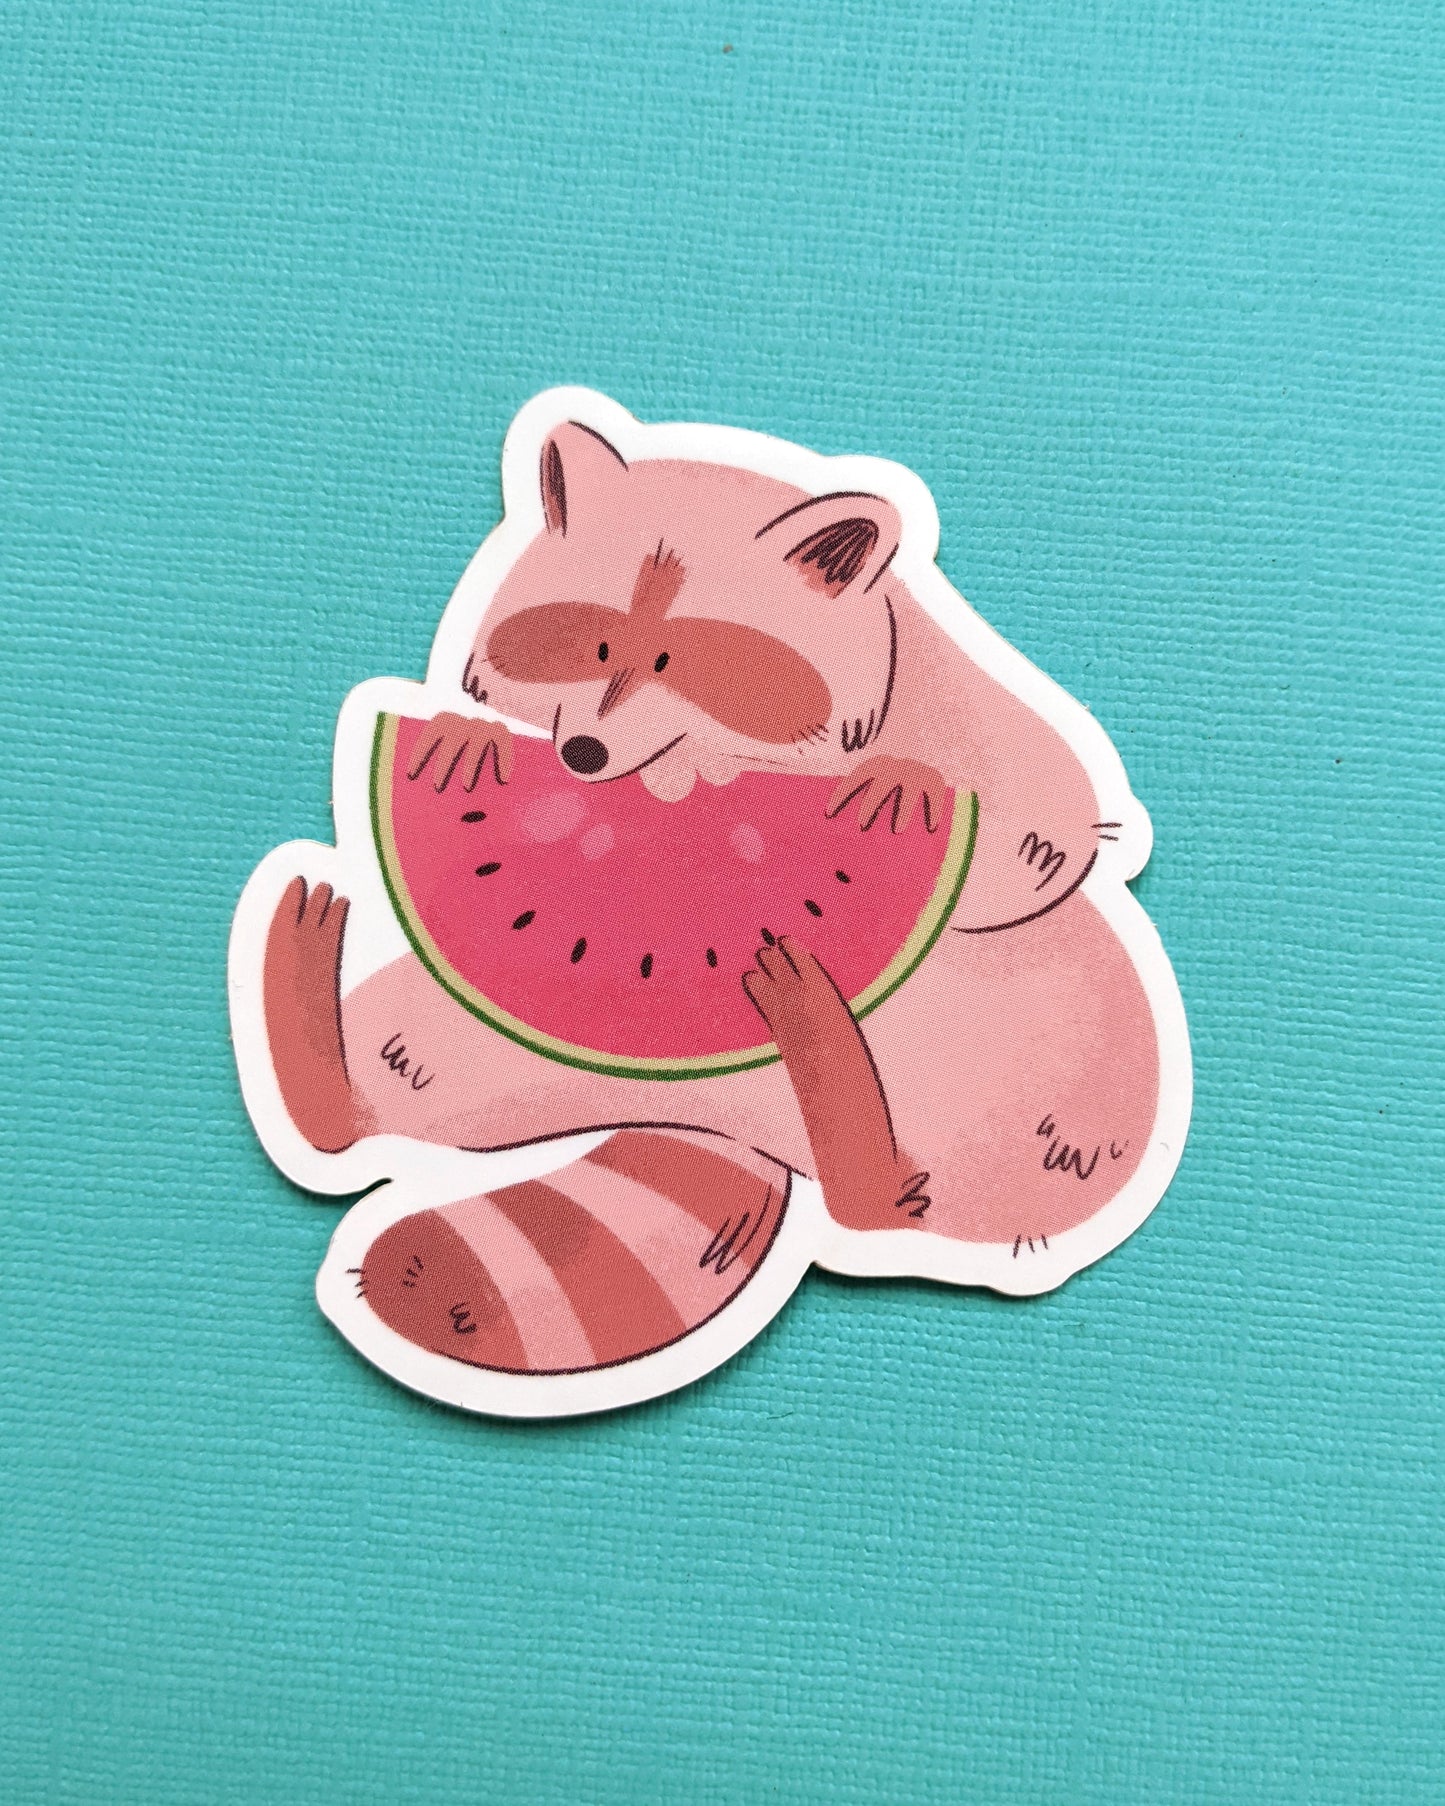 Raccoon Watermelon - Vinyl Sticker